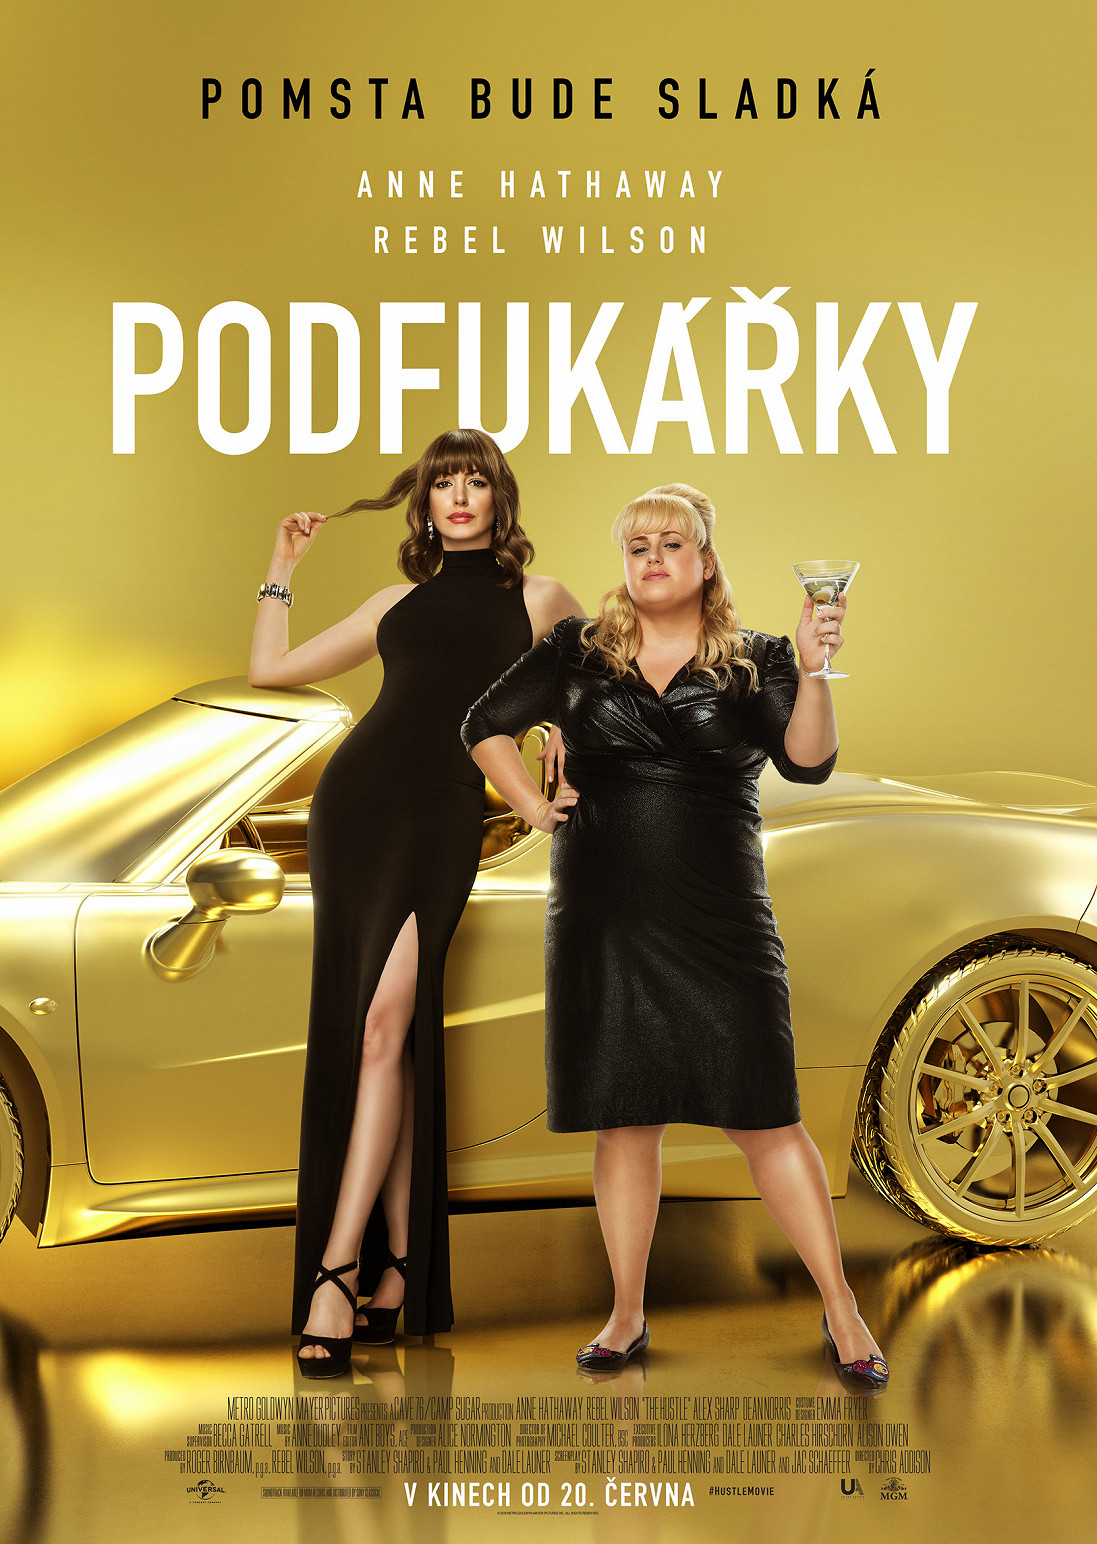 Stiahni si Filmy CZ/SK dabing Podfukarky / The Hustle (2019)(CZ/EN) = CSFD 57%